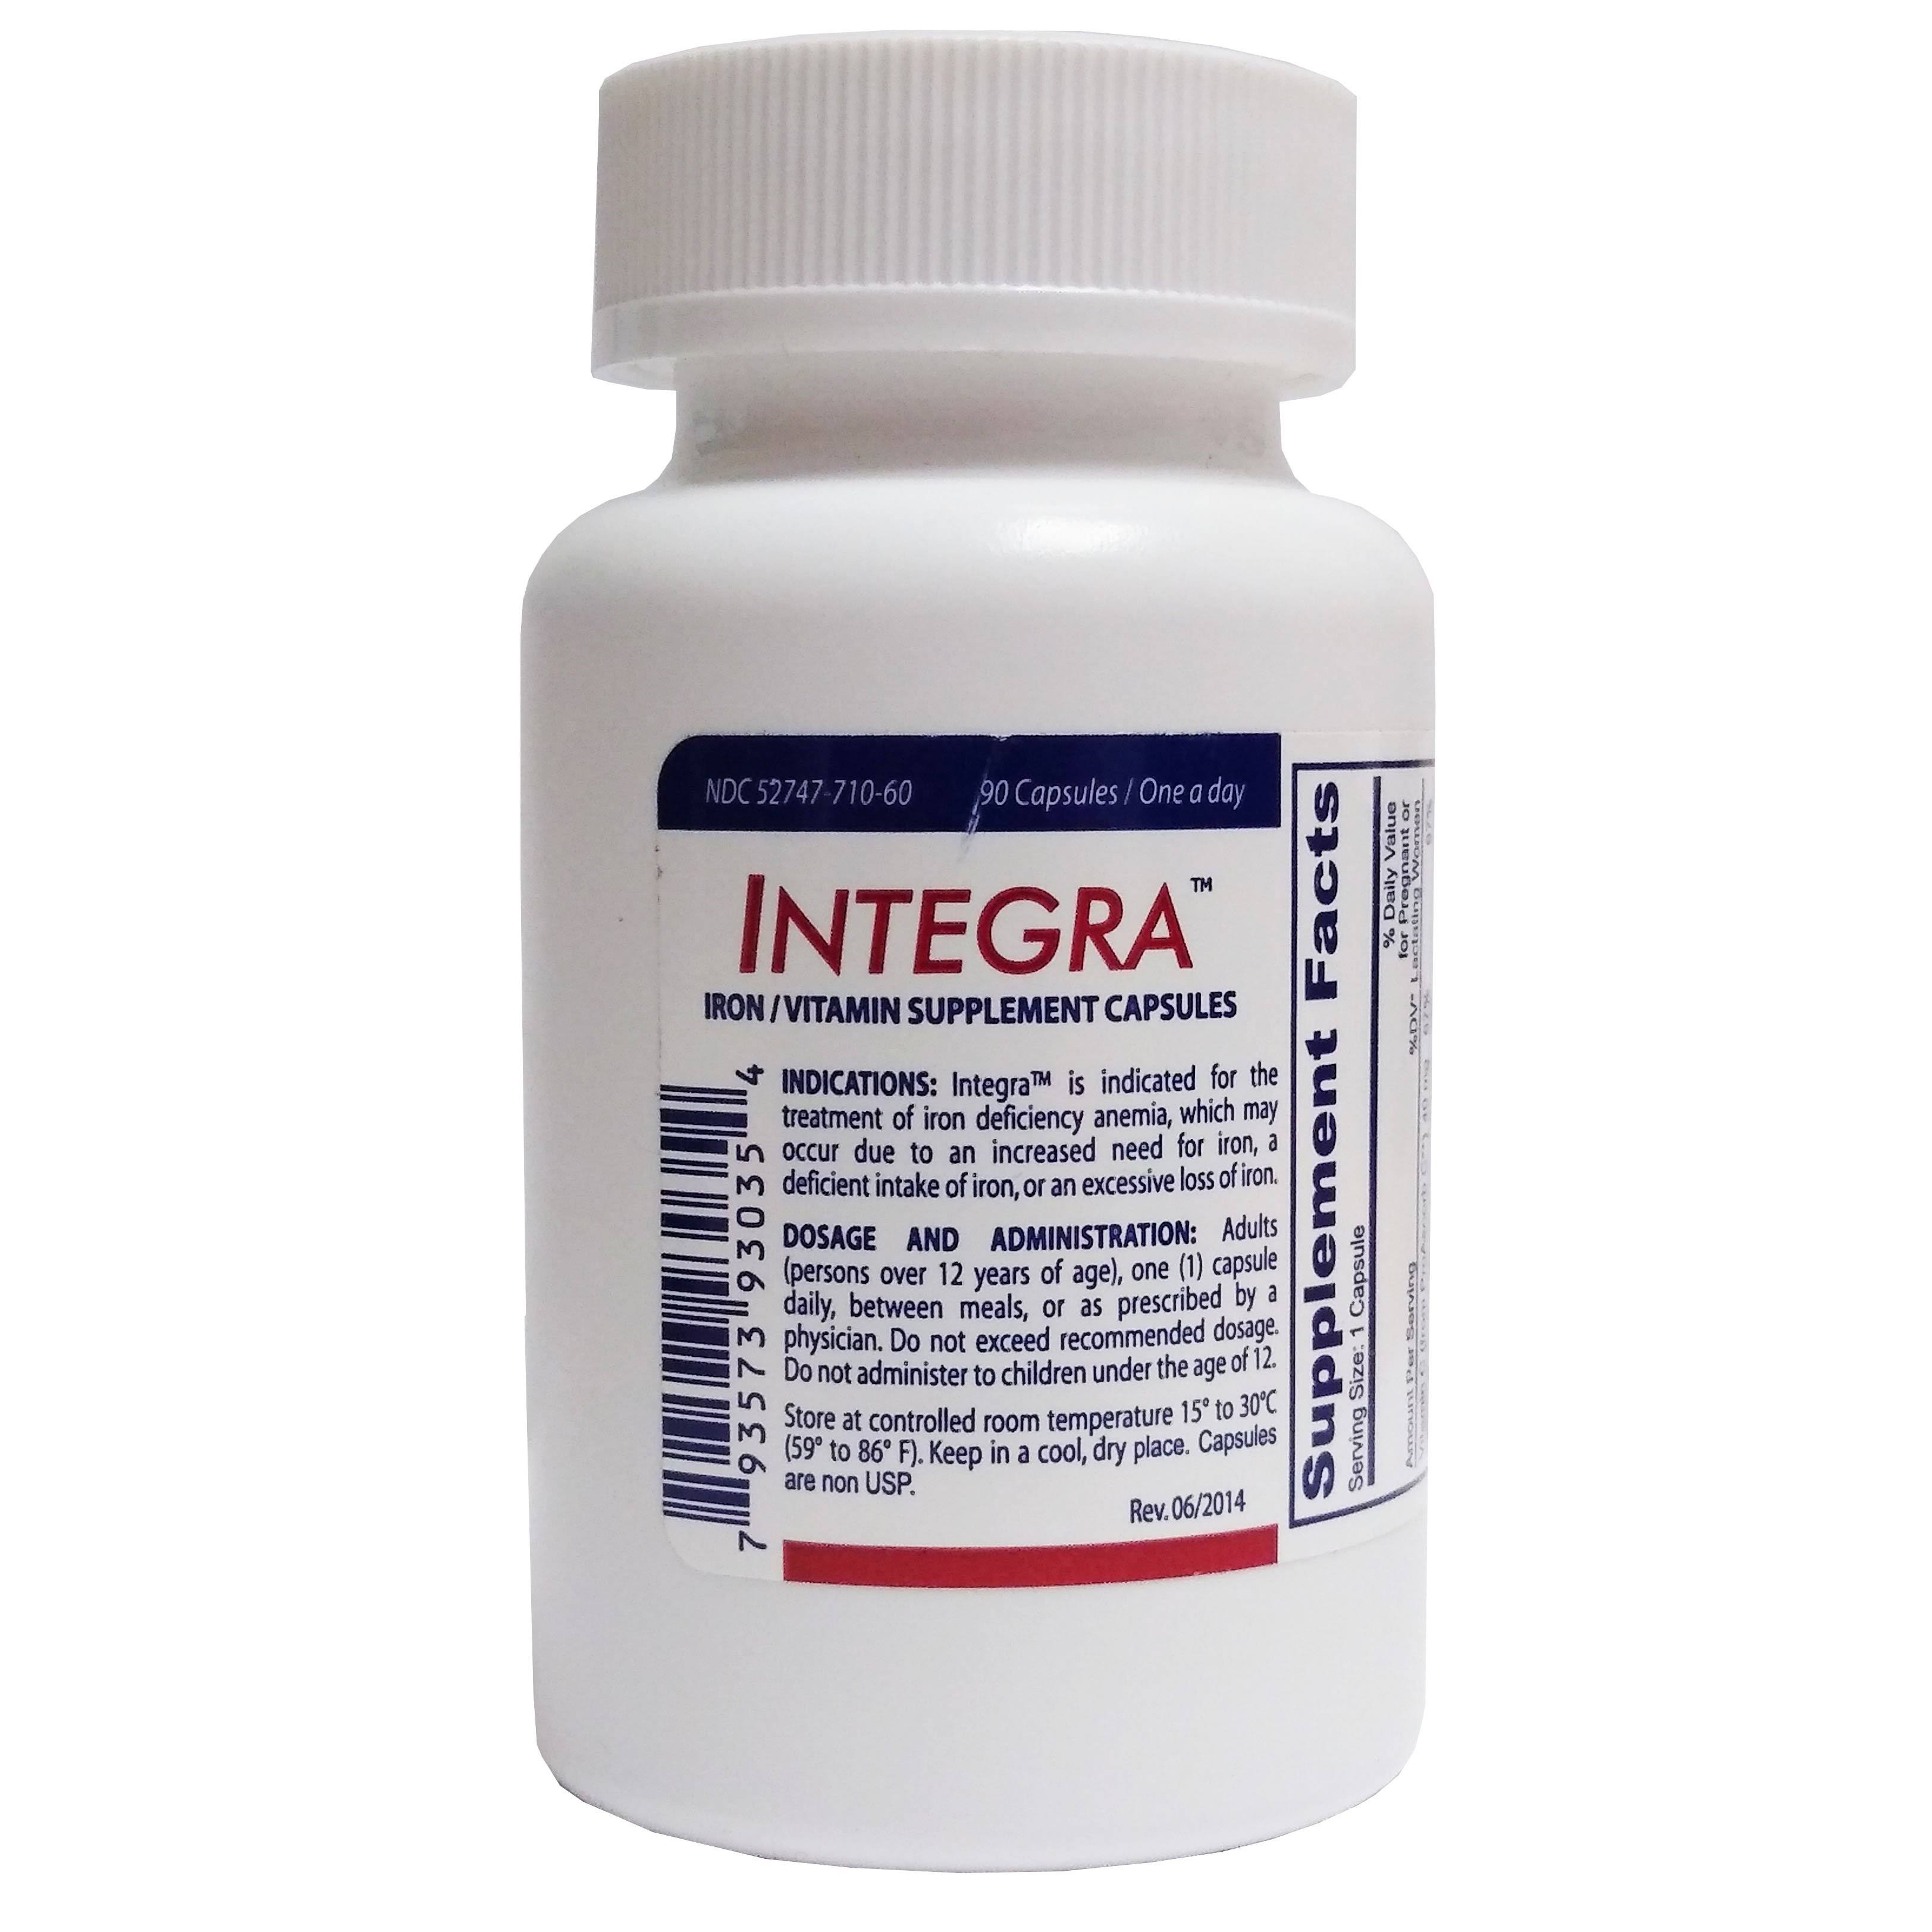 Integra Iron/Vitamin Supplement 90 Capsules, 1 Bottle Each, by US Pharmaceutical